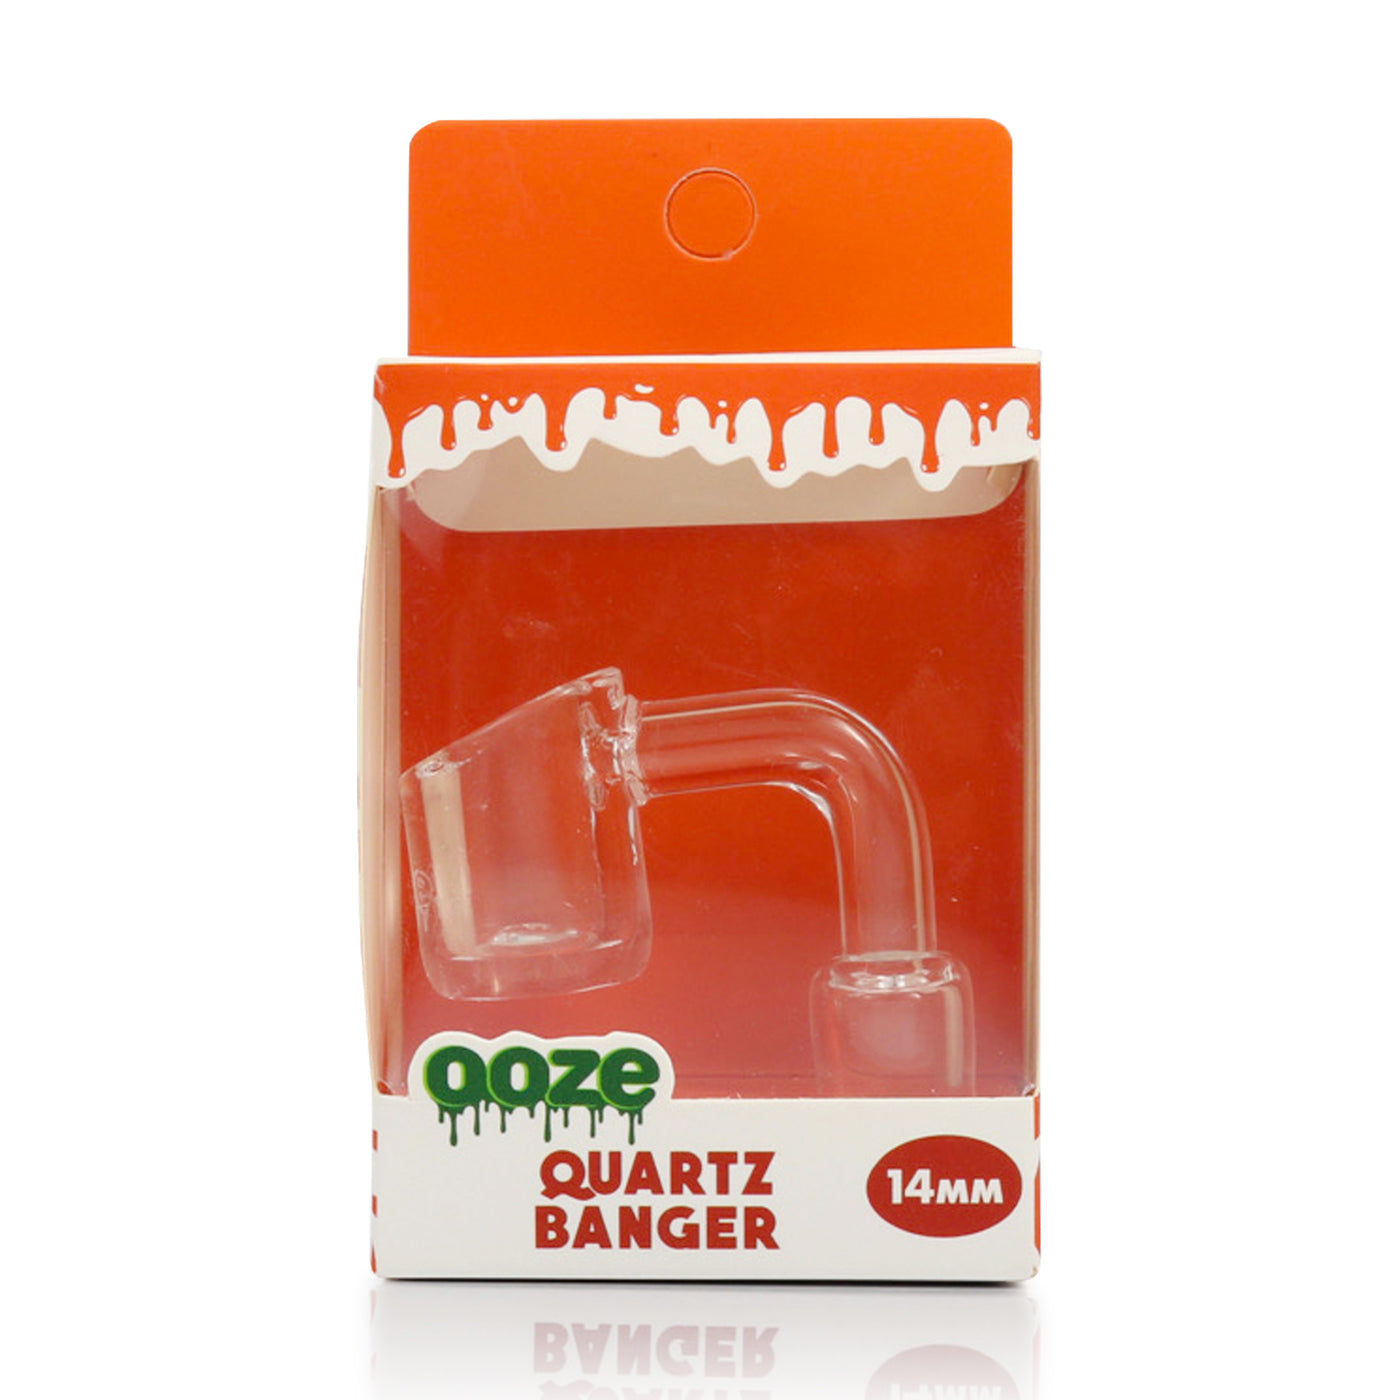 Ooze Quartz Banger 14mm